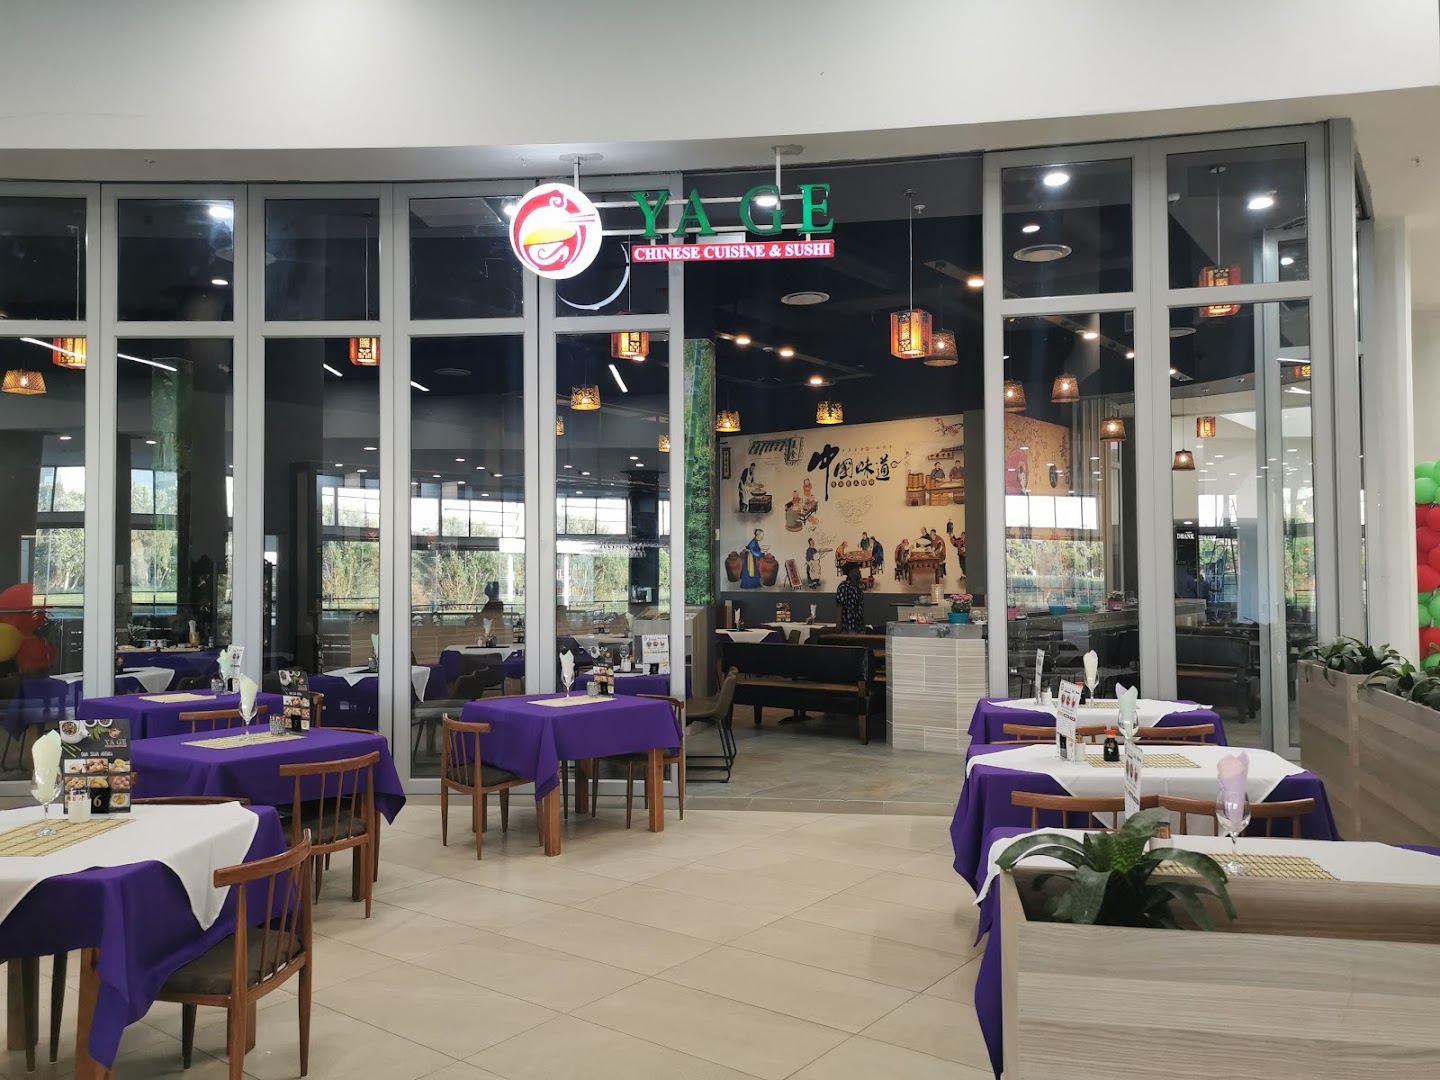 Yage Chinese Restaurant & Sushi – Centurion Mall